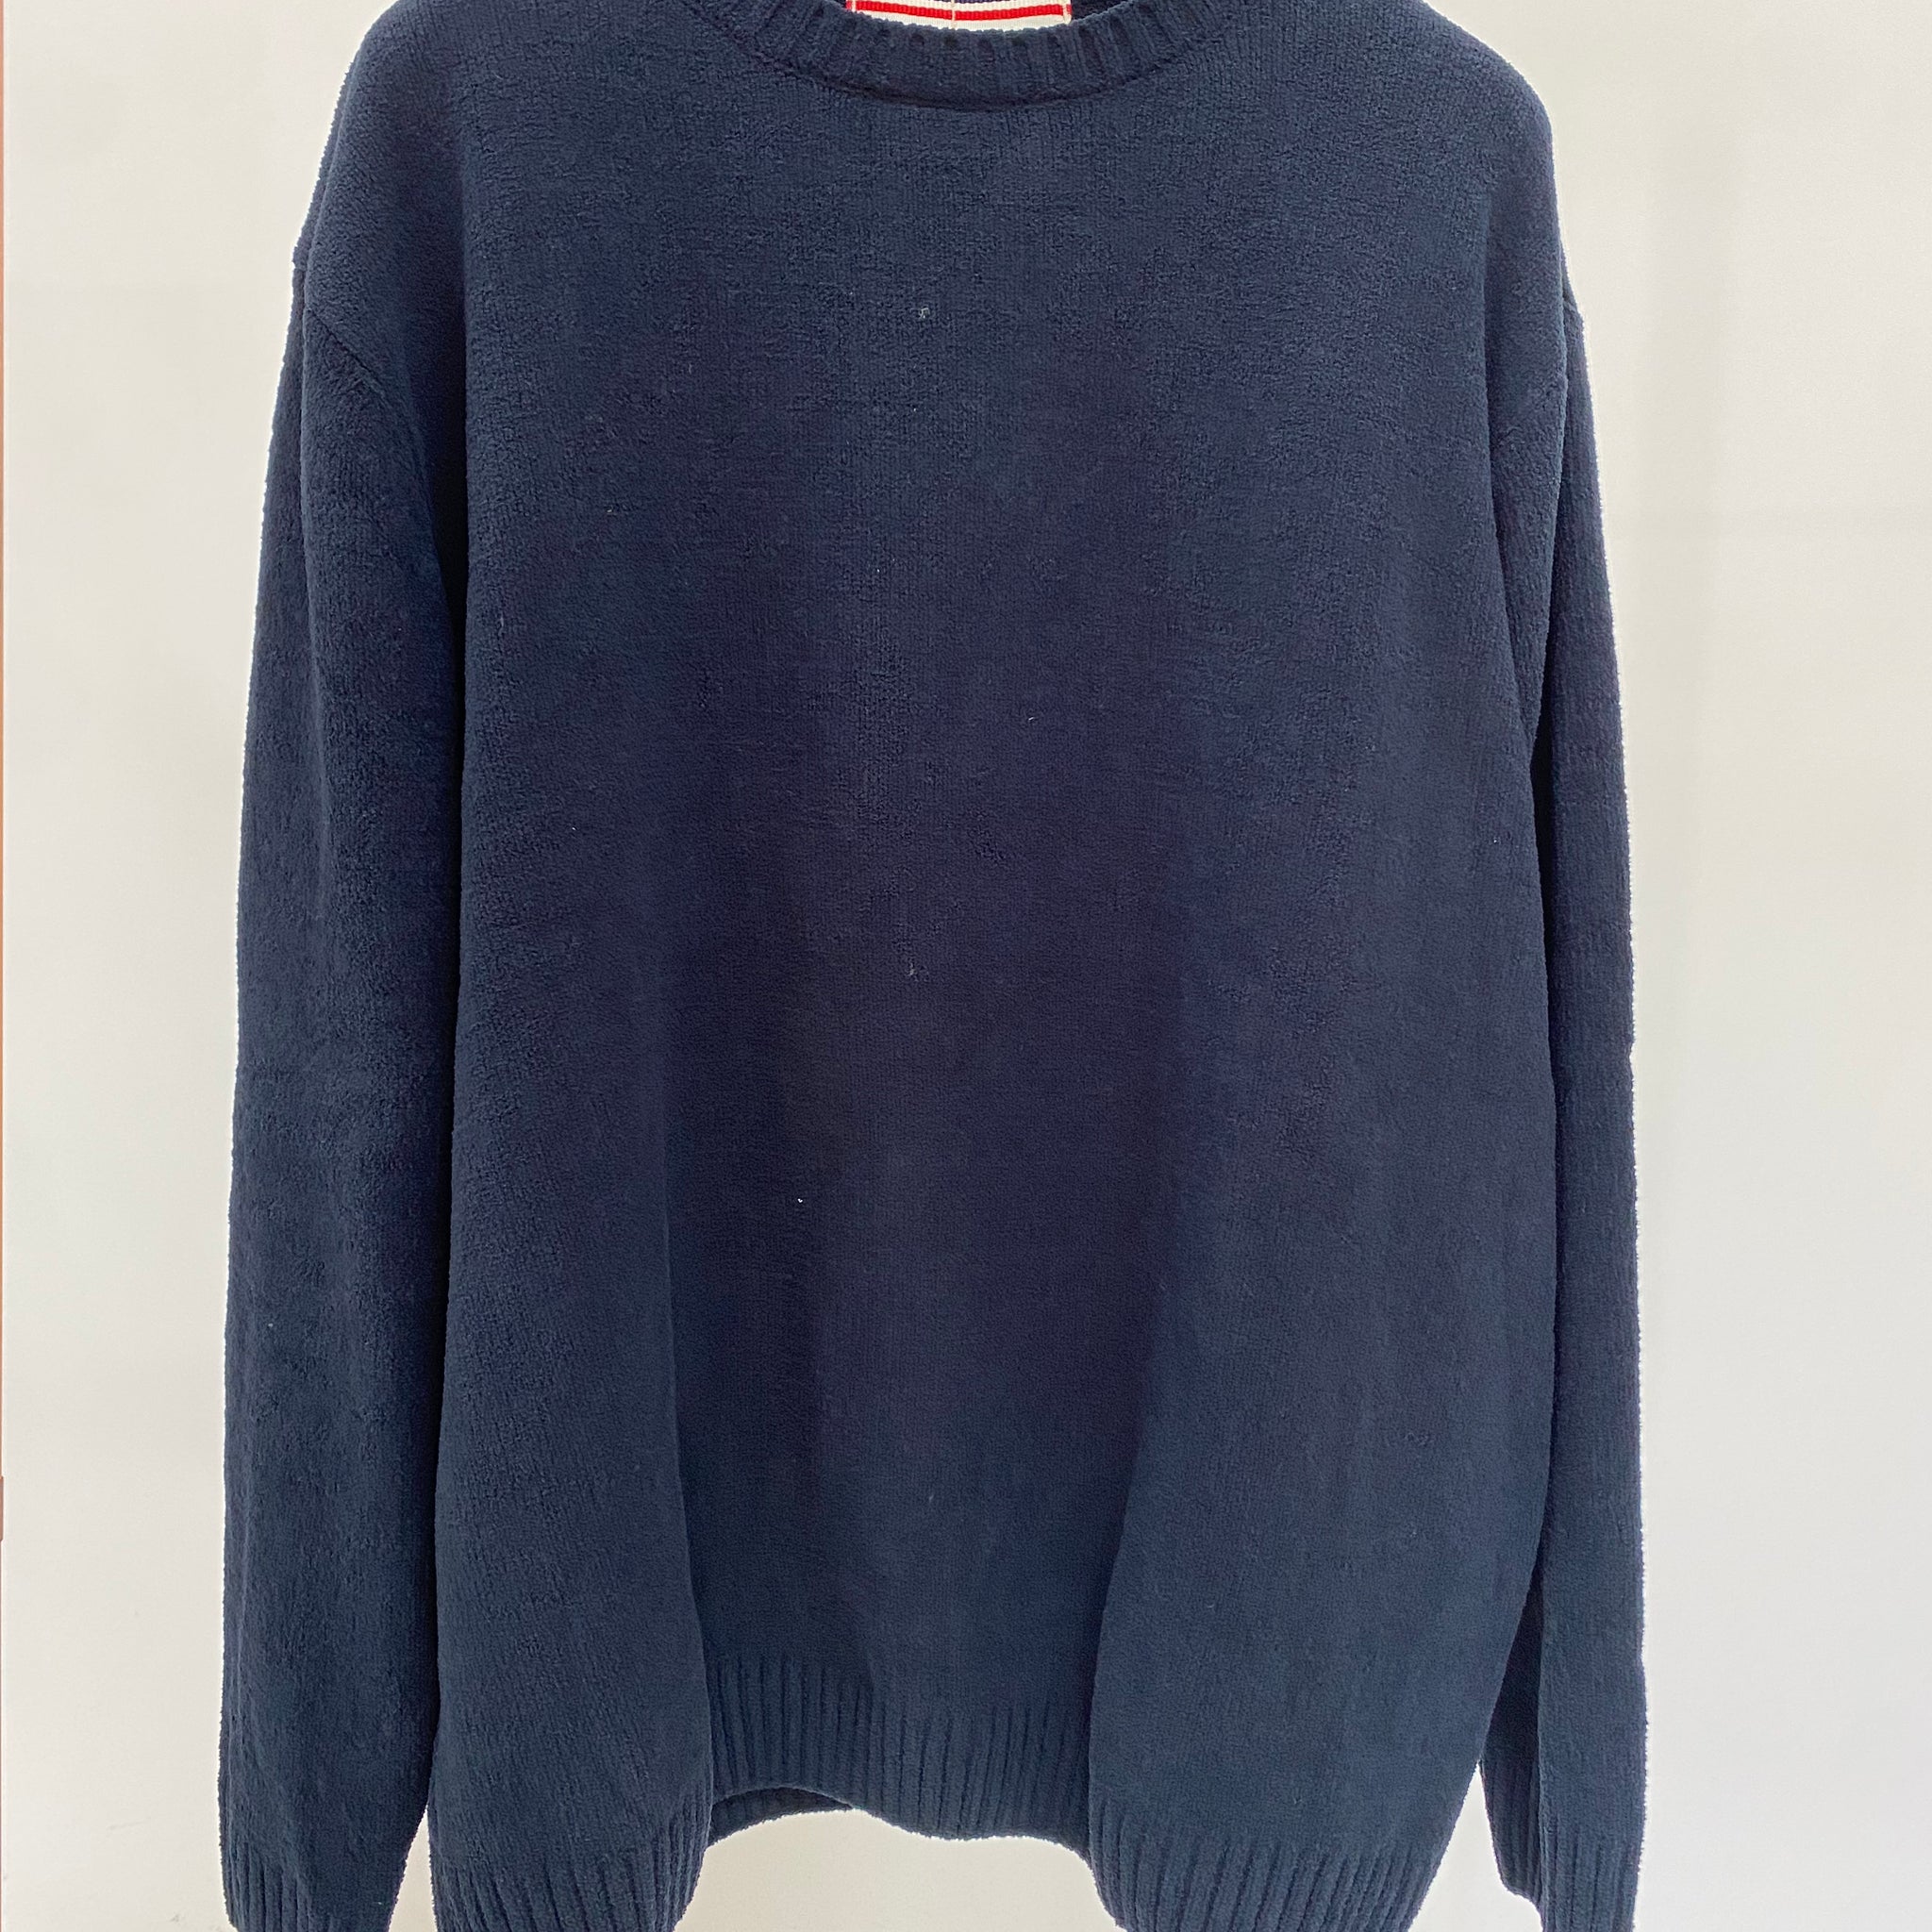 Blue chenille sweater